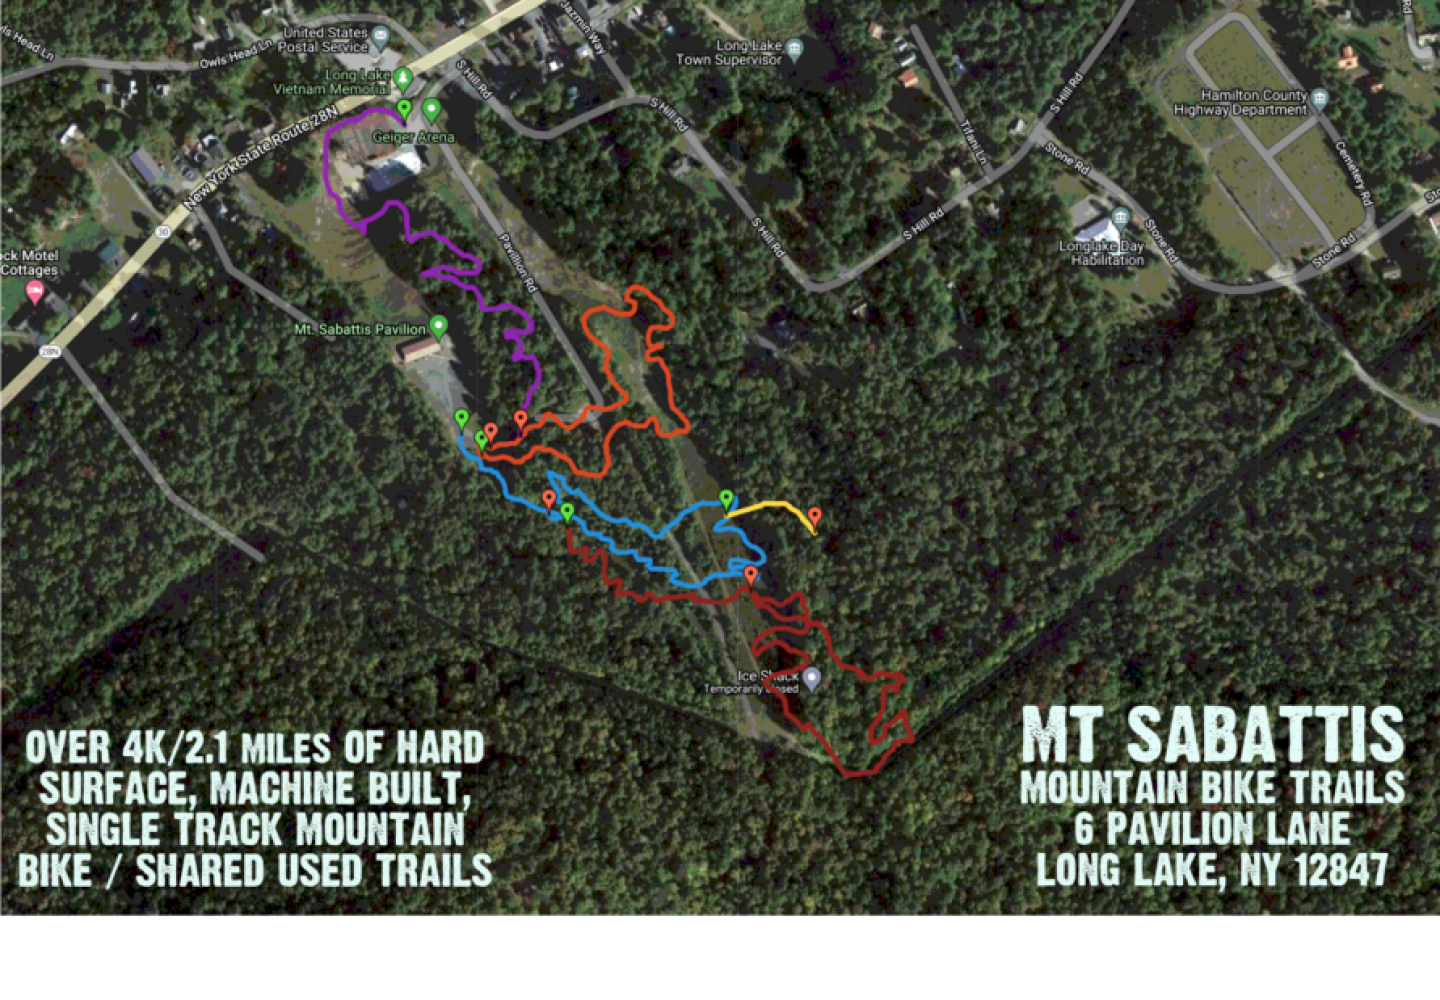 Mt. Sebattis Trail Map in Long Lake, NY.